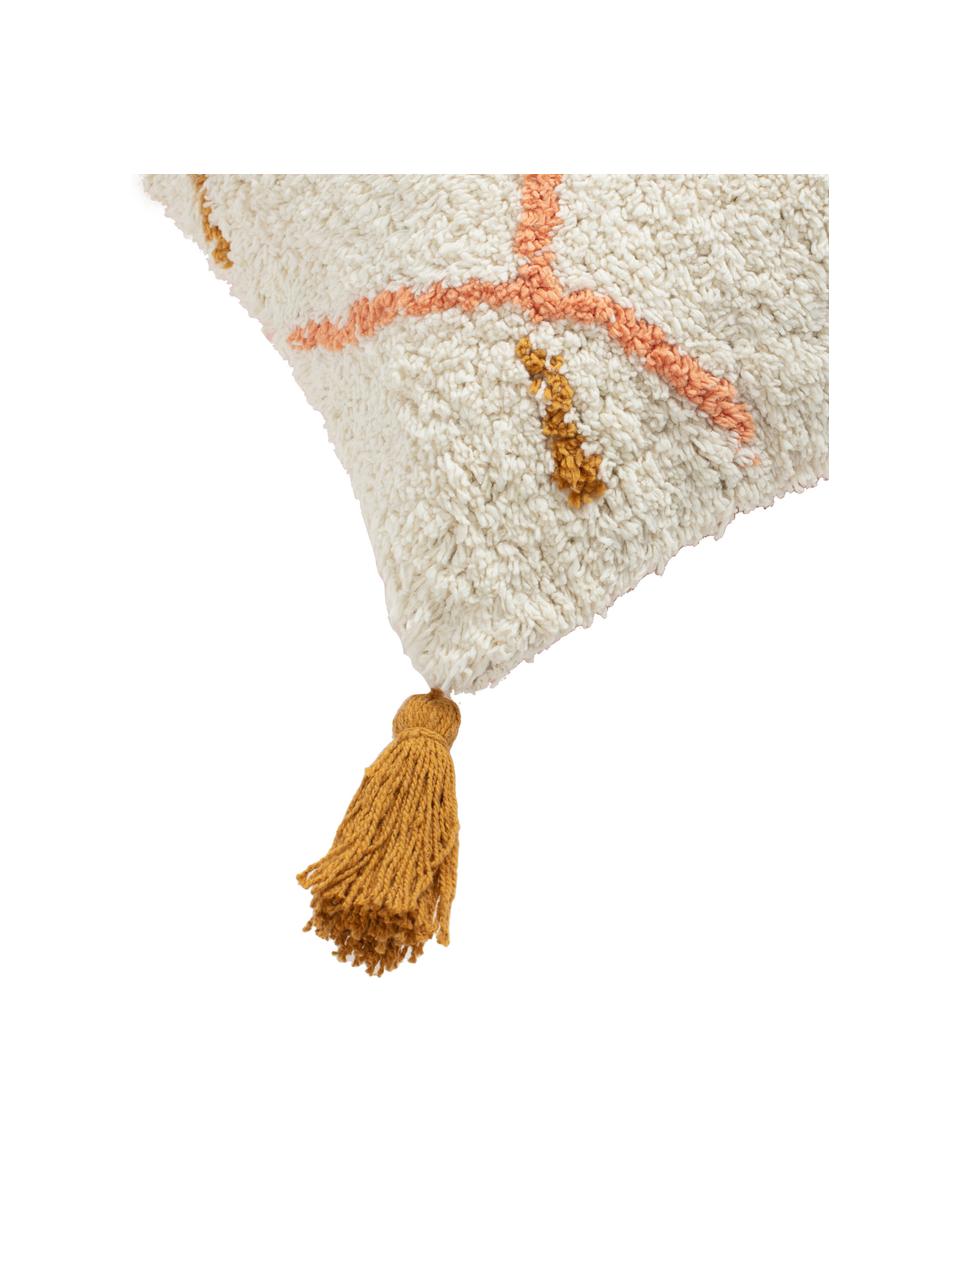 Flauschige Bohokissenhülle Asila mit bunten Quasten, 100% Baumwolle, Cremefarben, Mehrfarbig, 45 x 45 cm